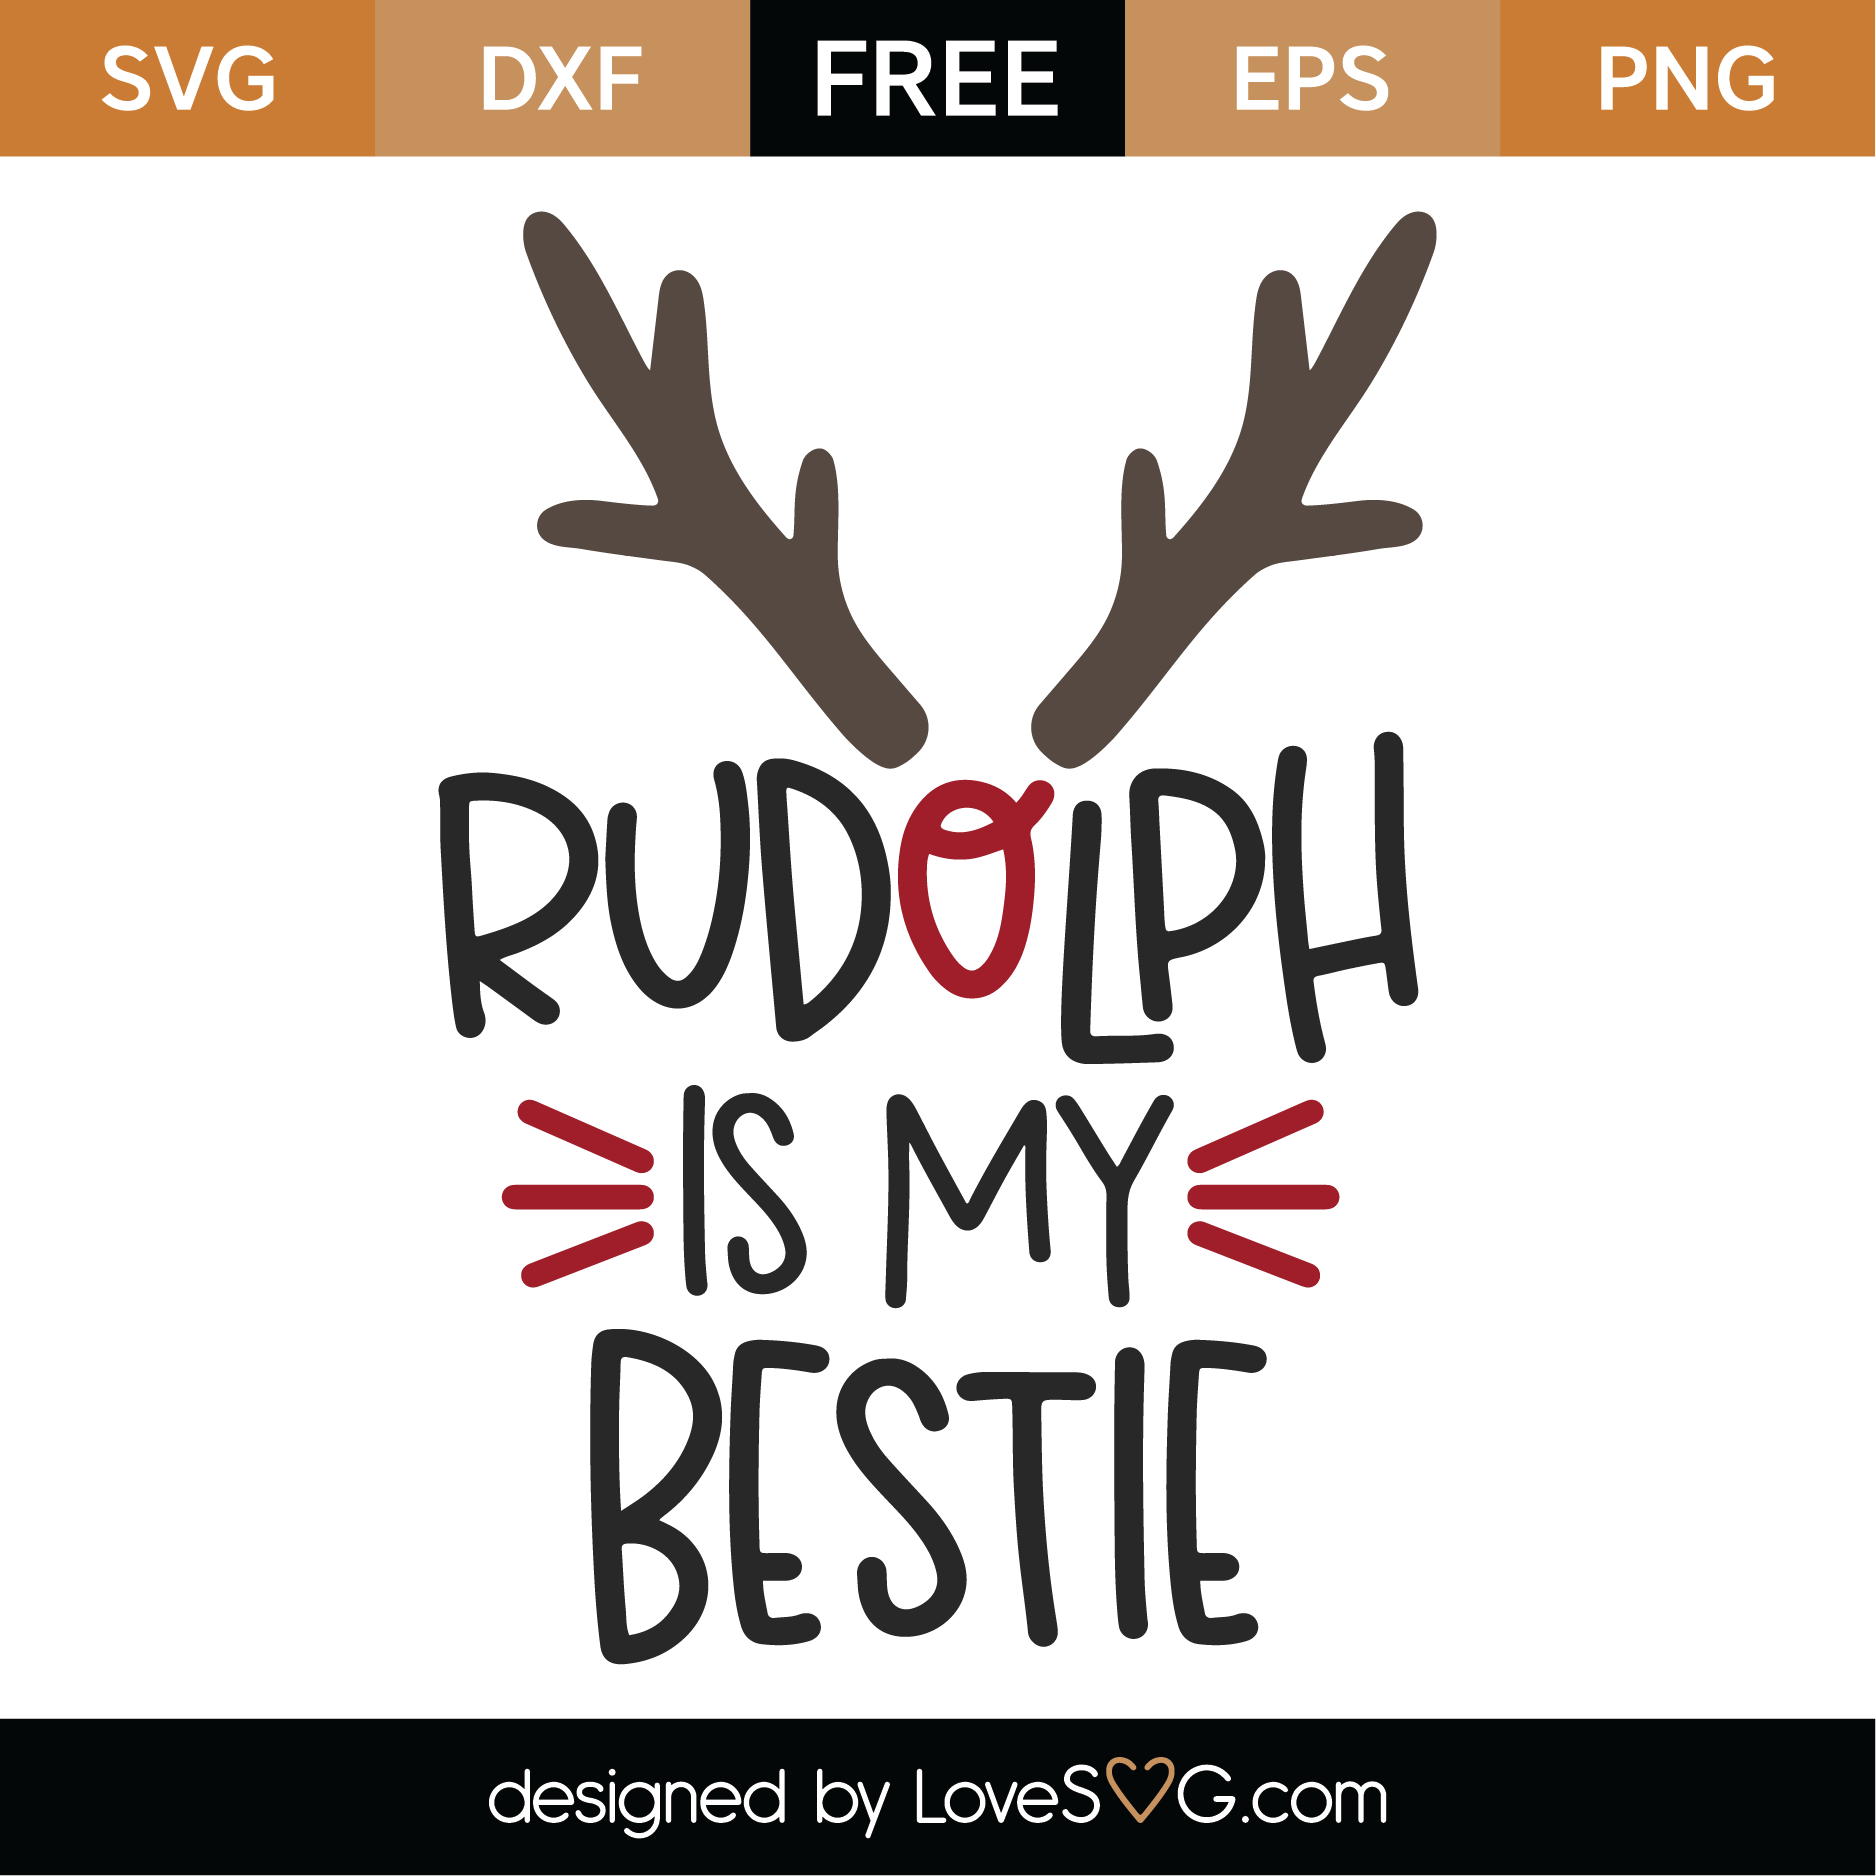 Download Free Rudolph Is My Bestie SVG Cut File | Lovesvg.com